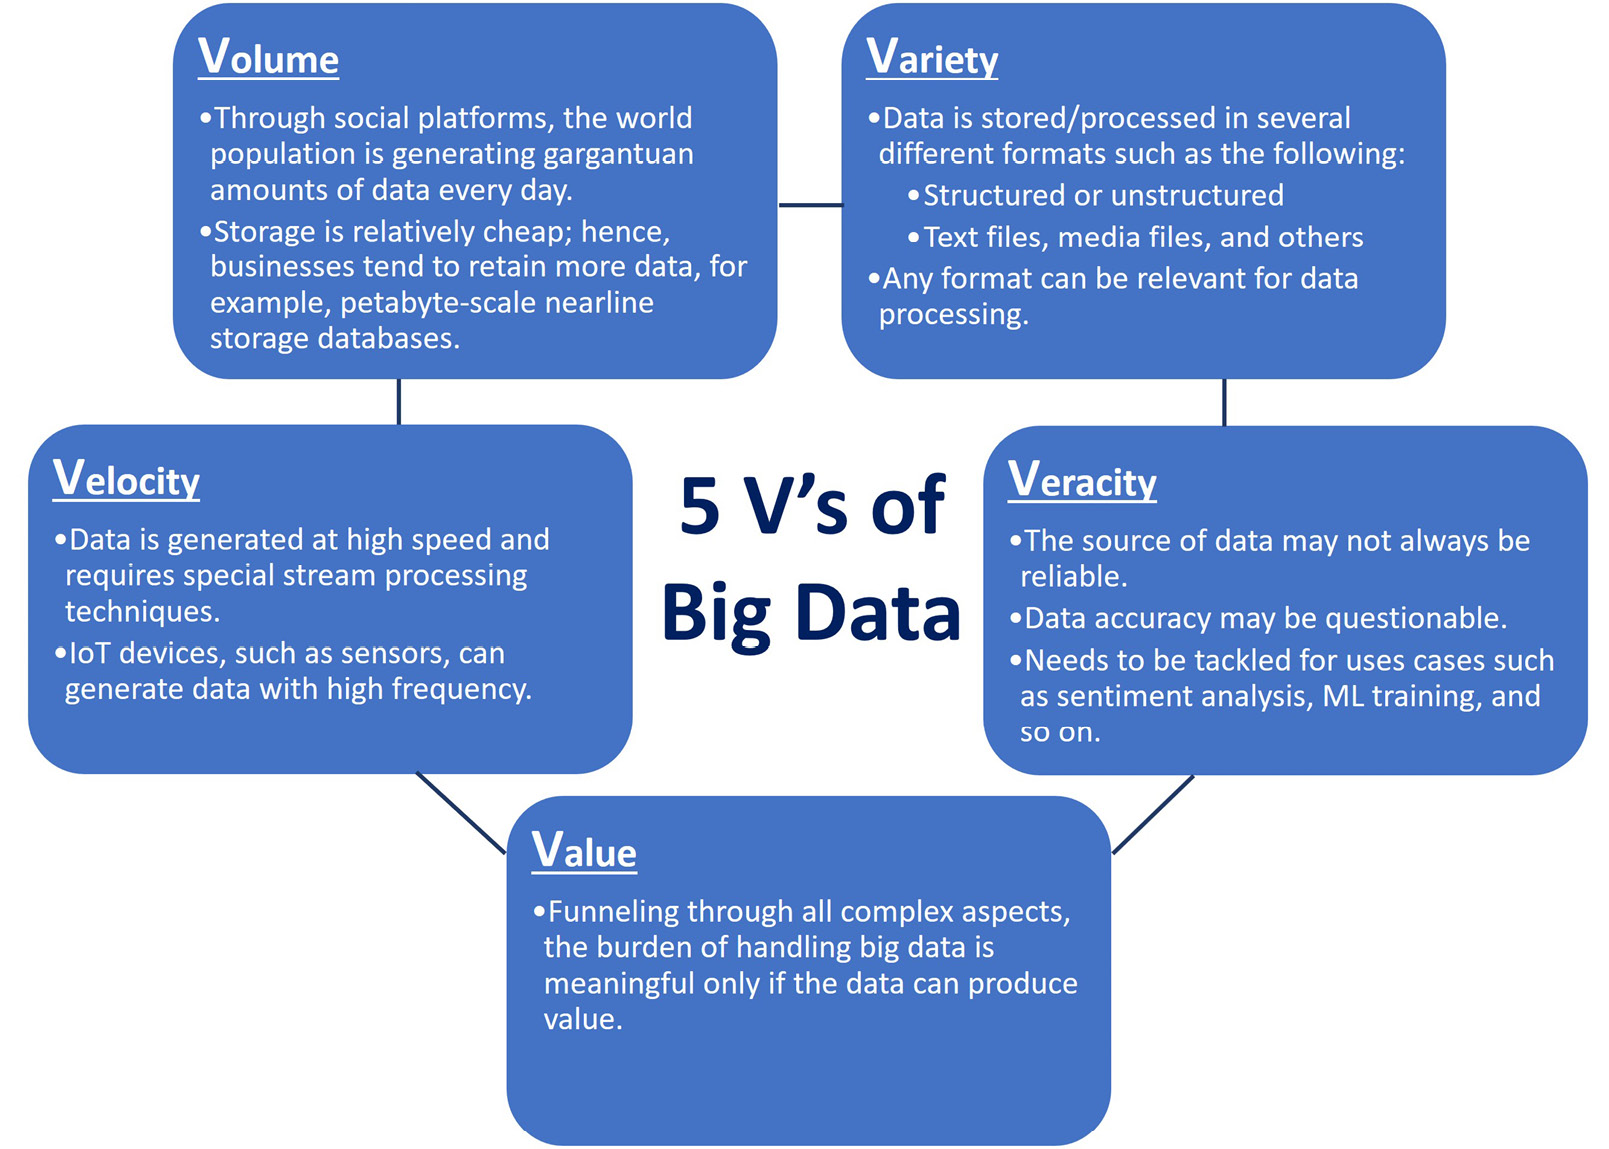 Figure 8.1: The 5 V's of big data
